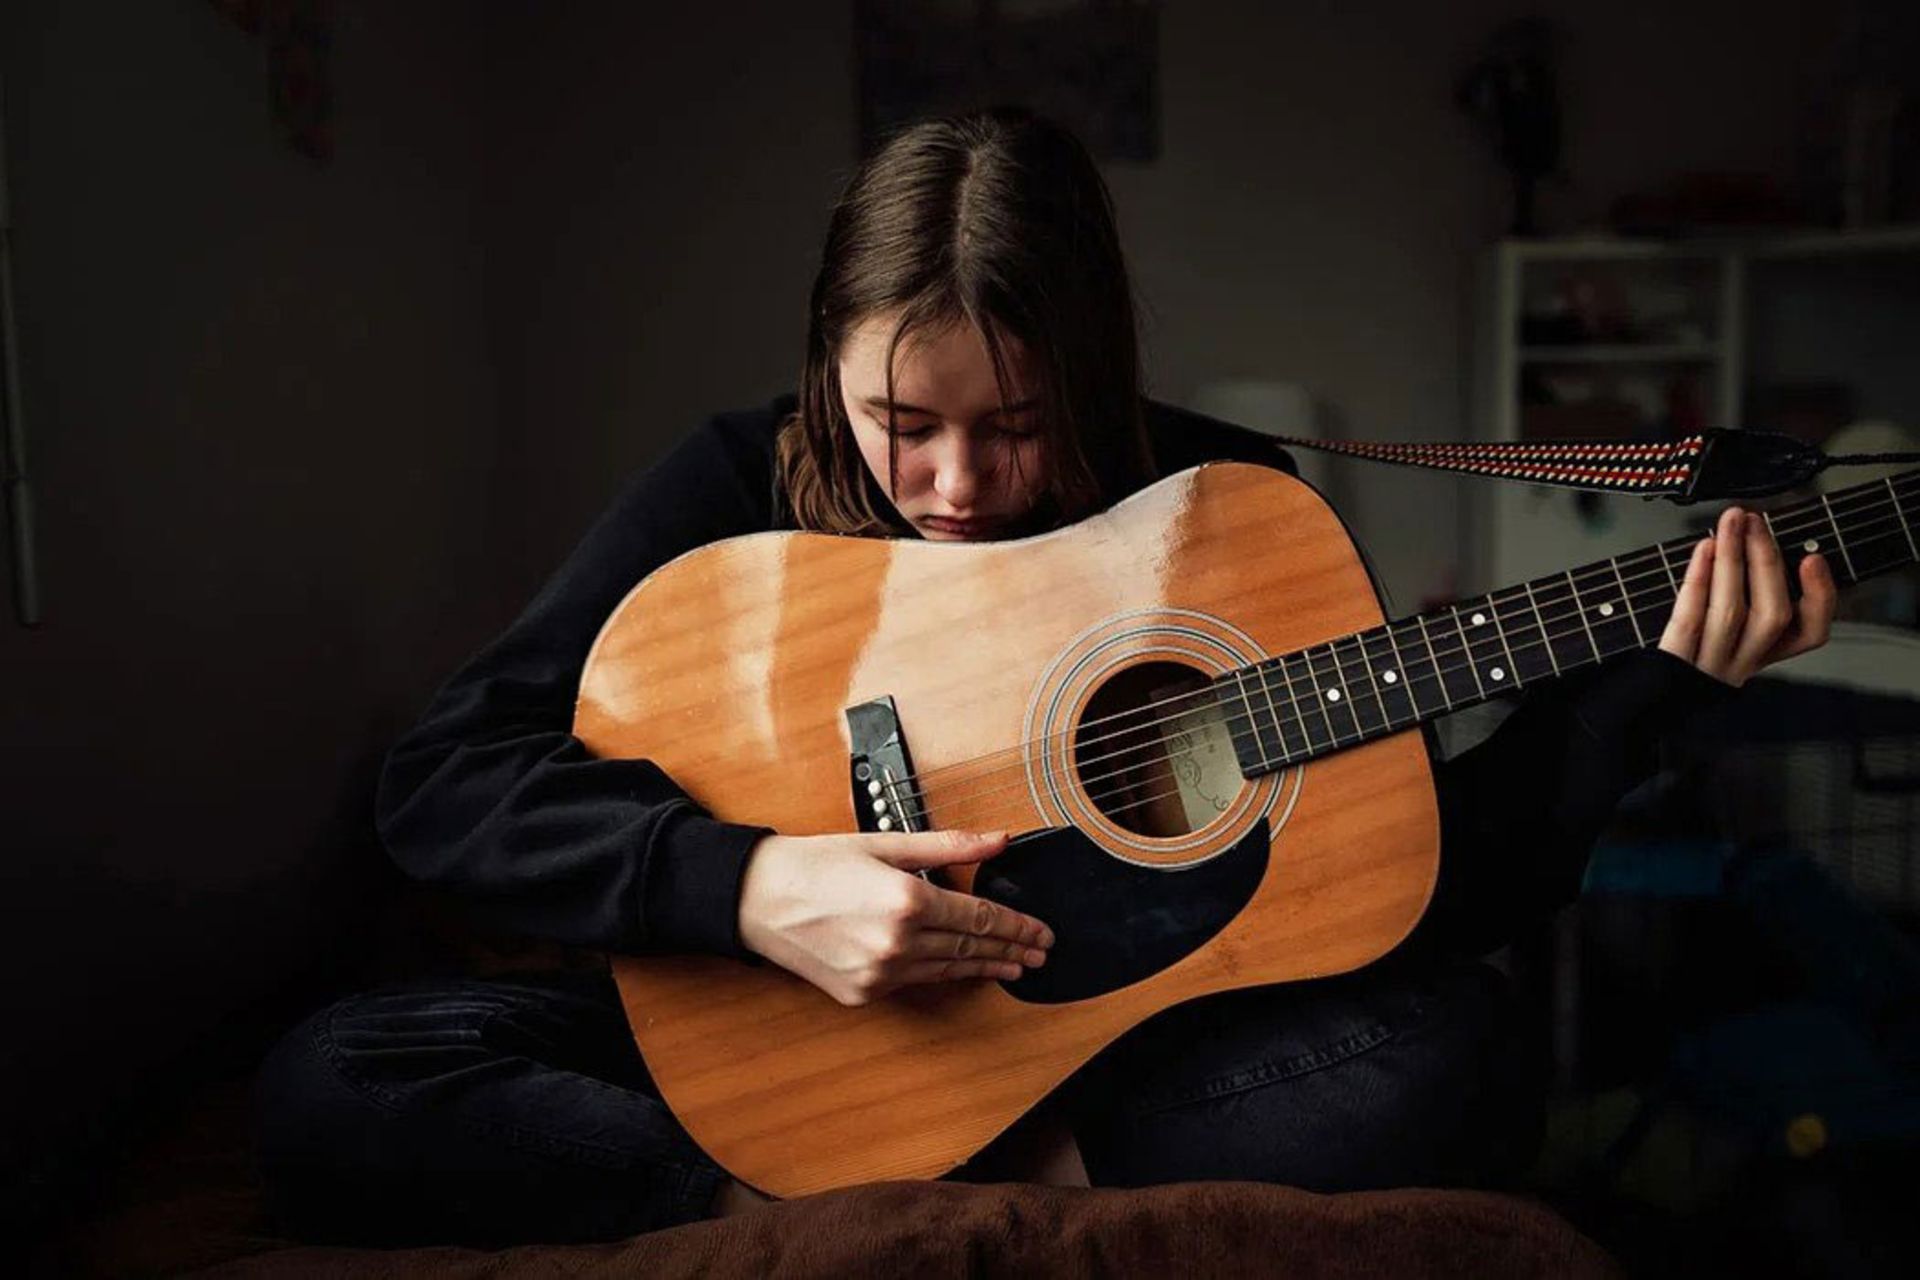 Sad girl playing guitar